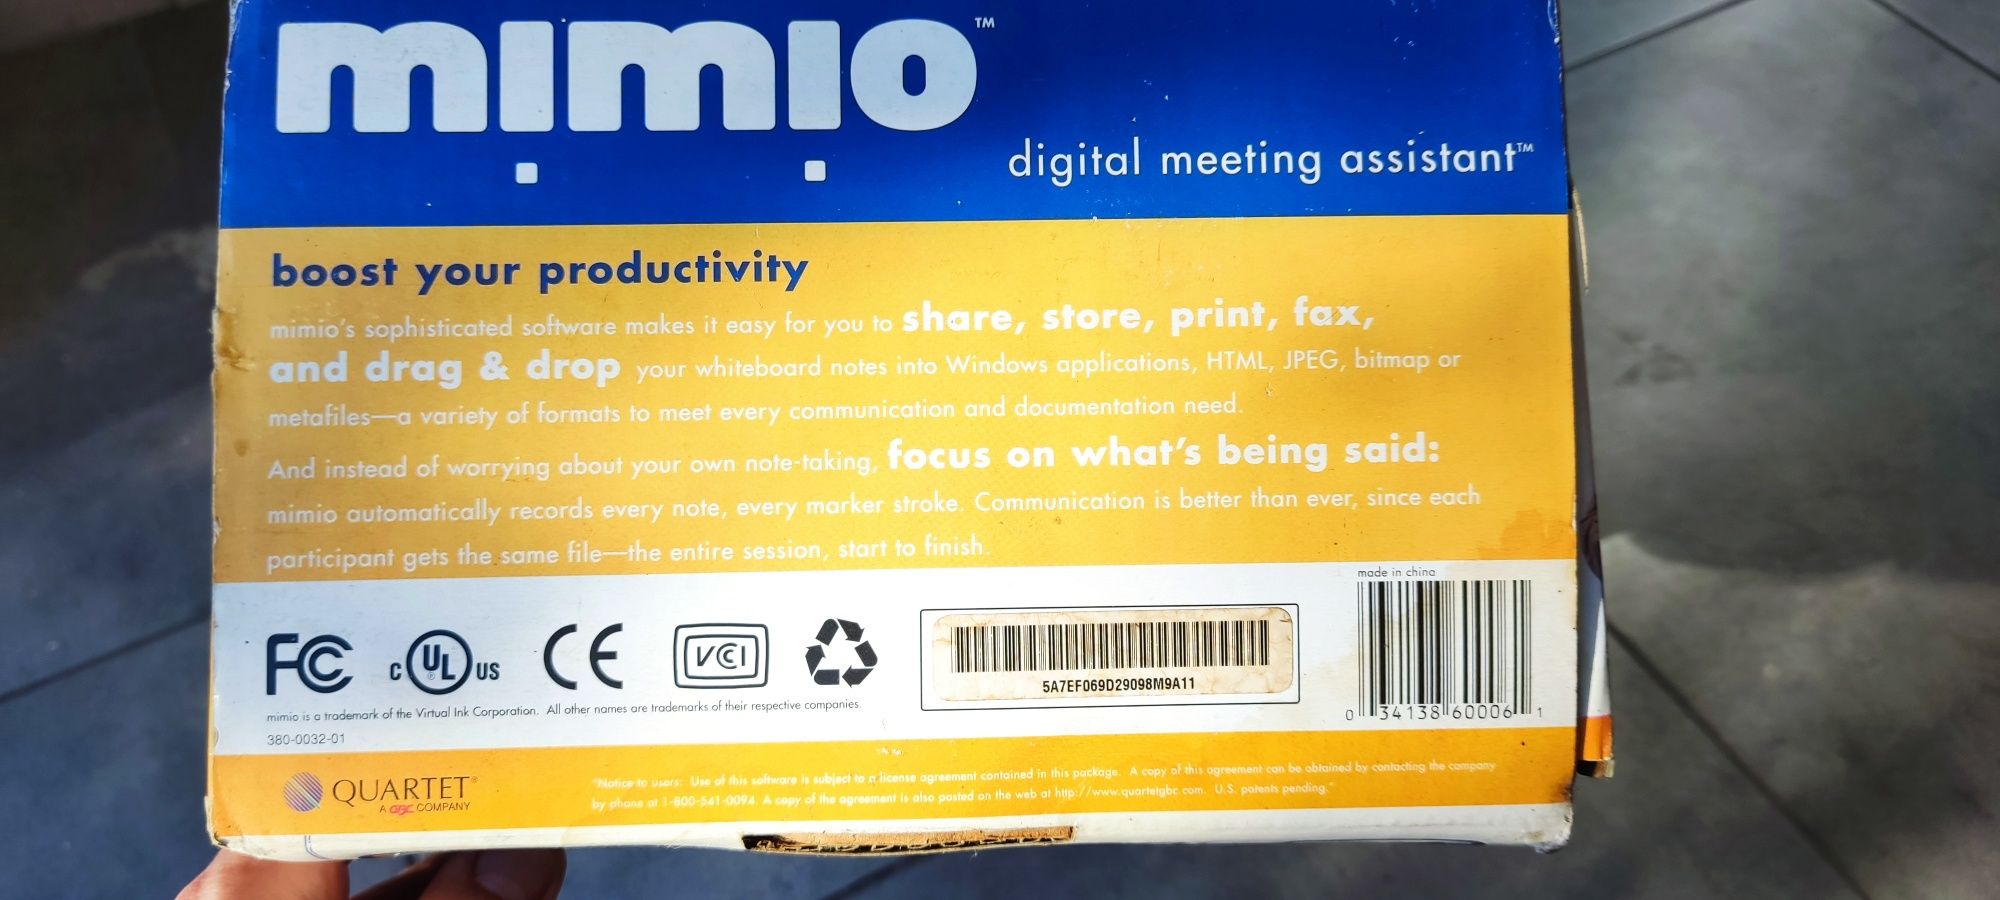 Mimio digital meeting assistant